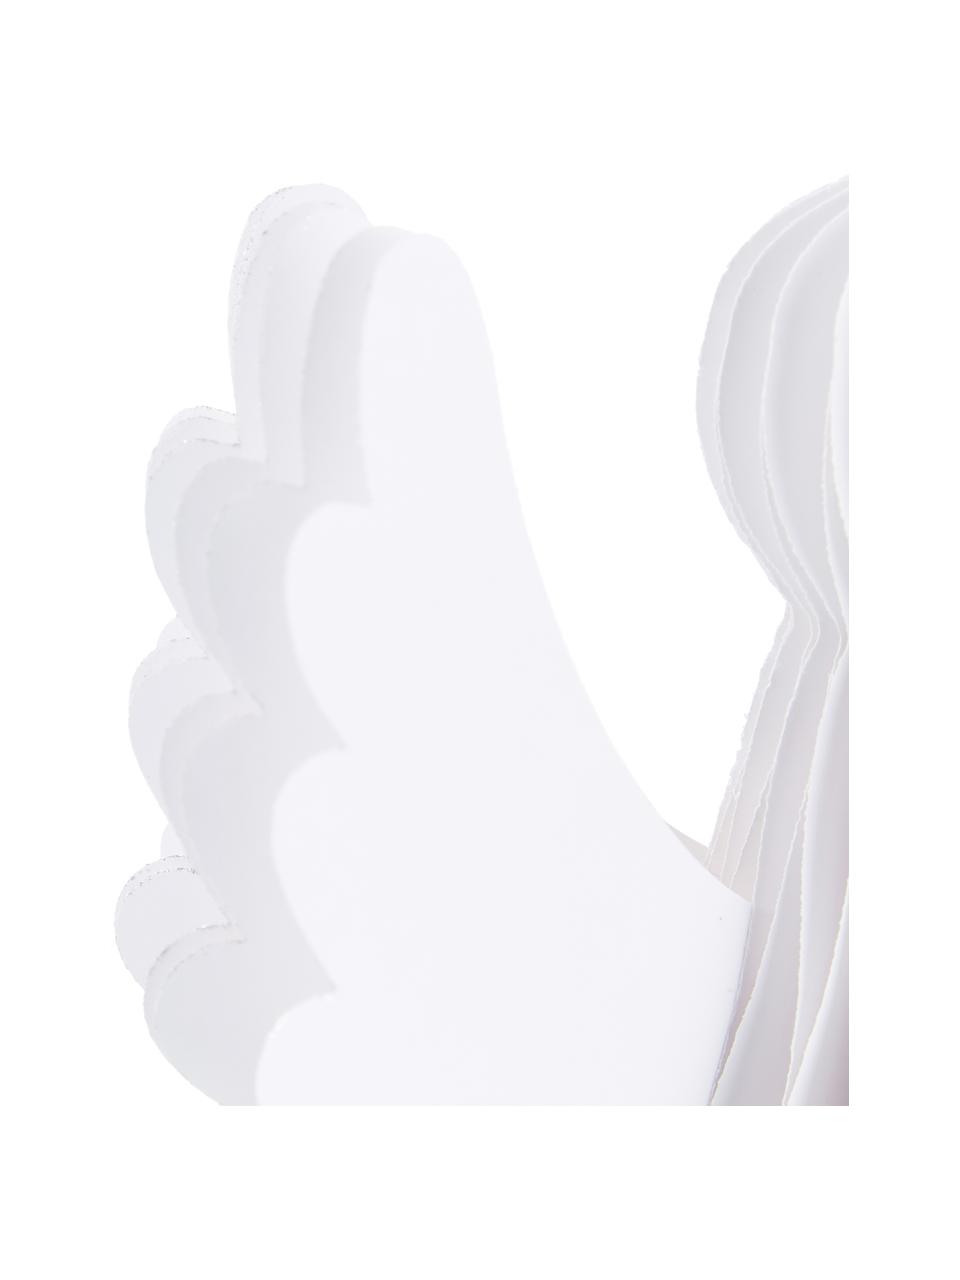 Oggetto decorativo bianca Angel, Carta, Bianco, Ø 21 x Alt. 27 cm